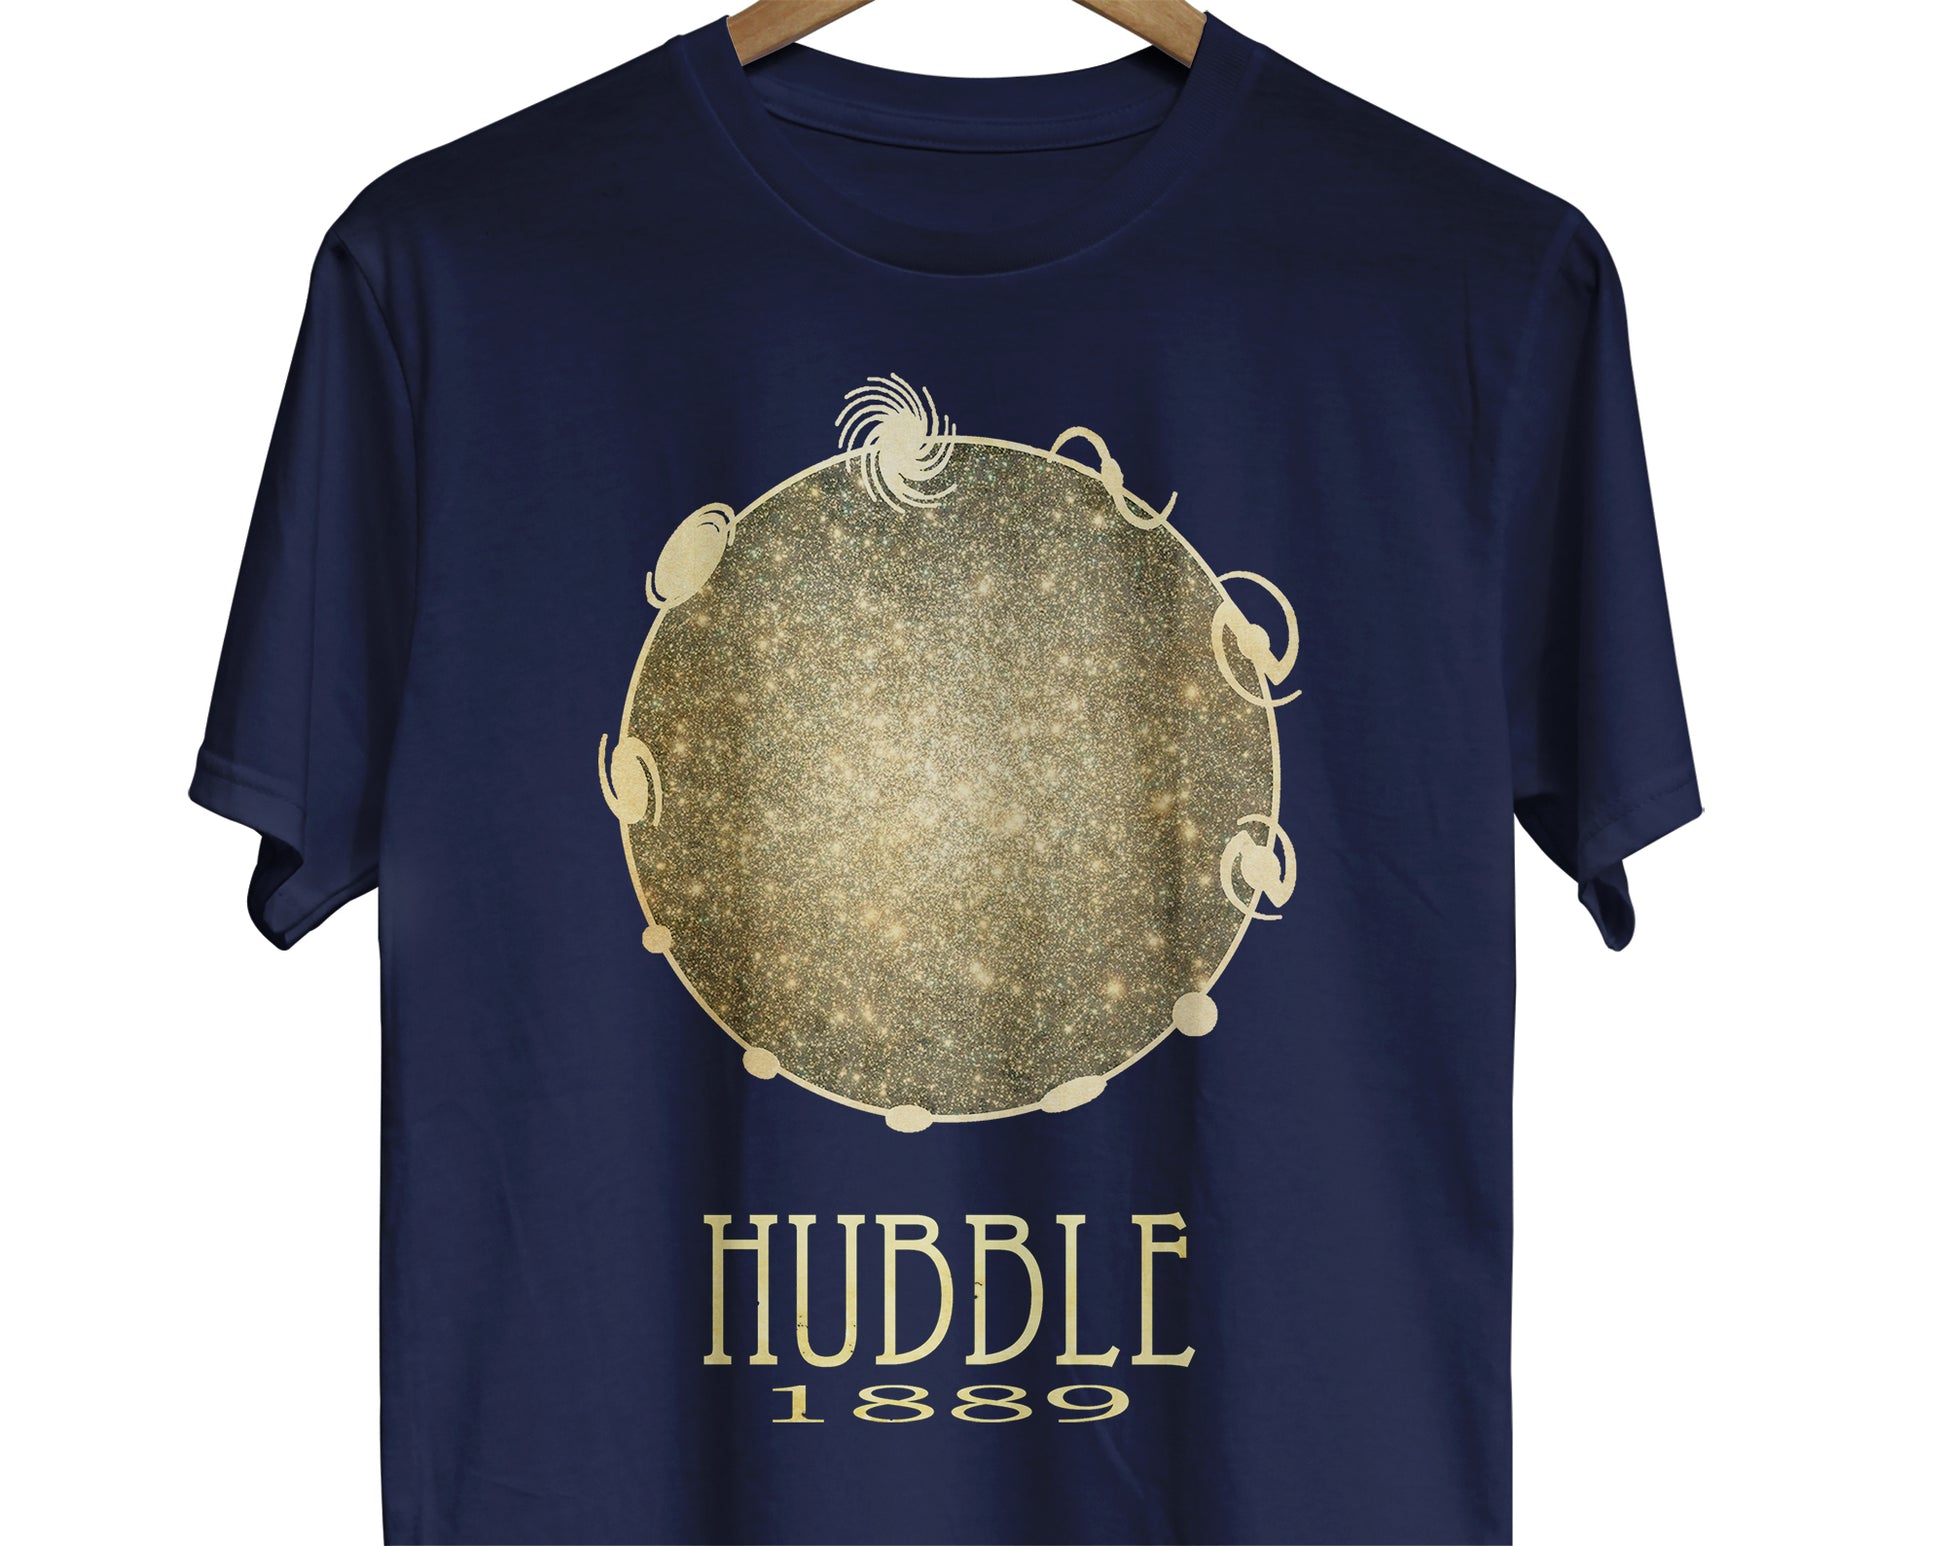 Edwin Hubble astronomy t-shirt with galaxy identification illustration